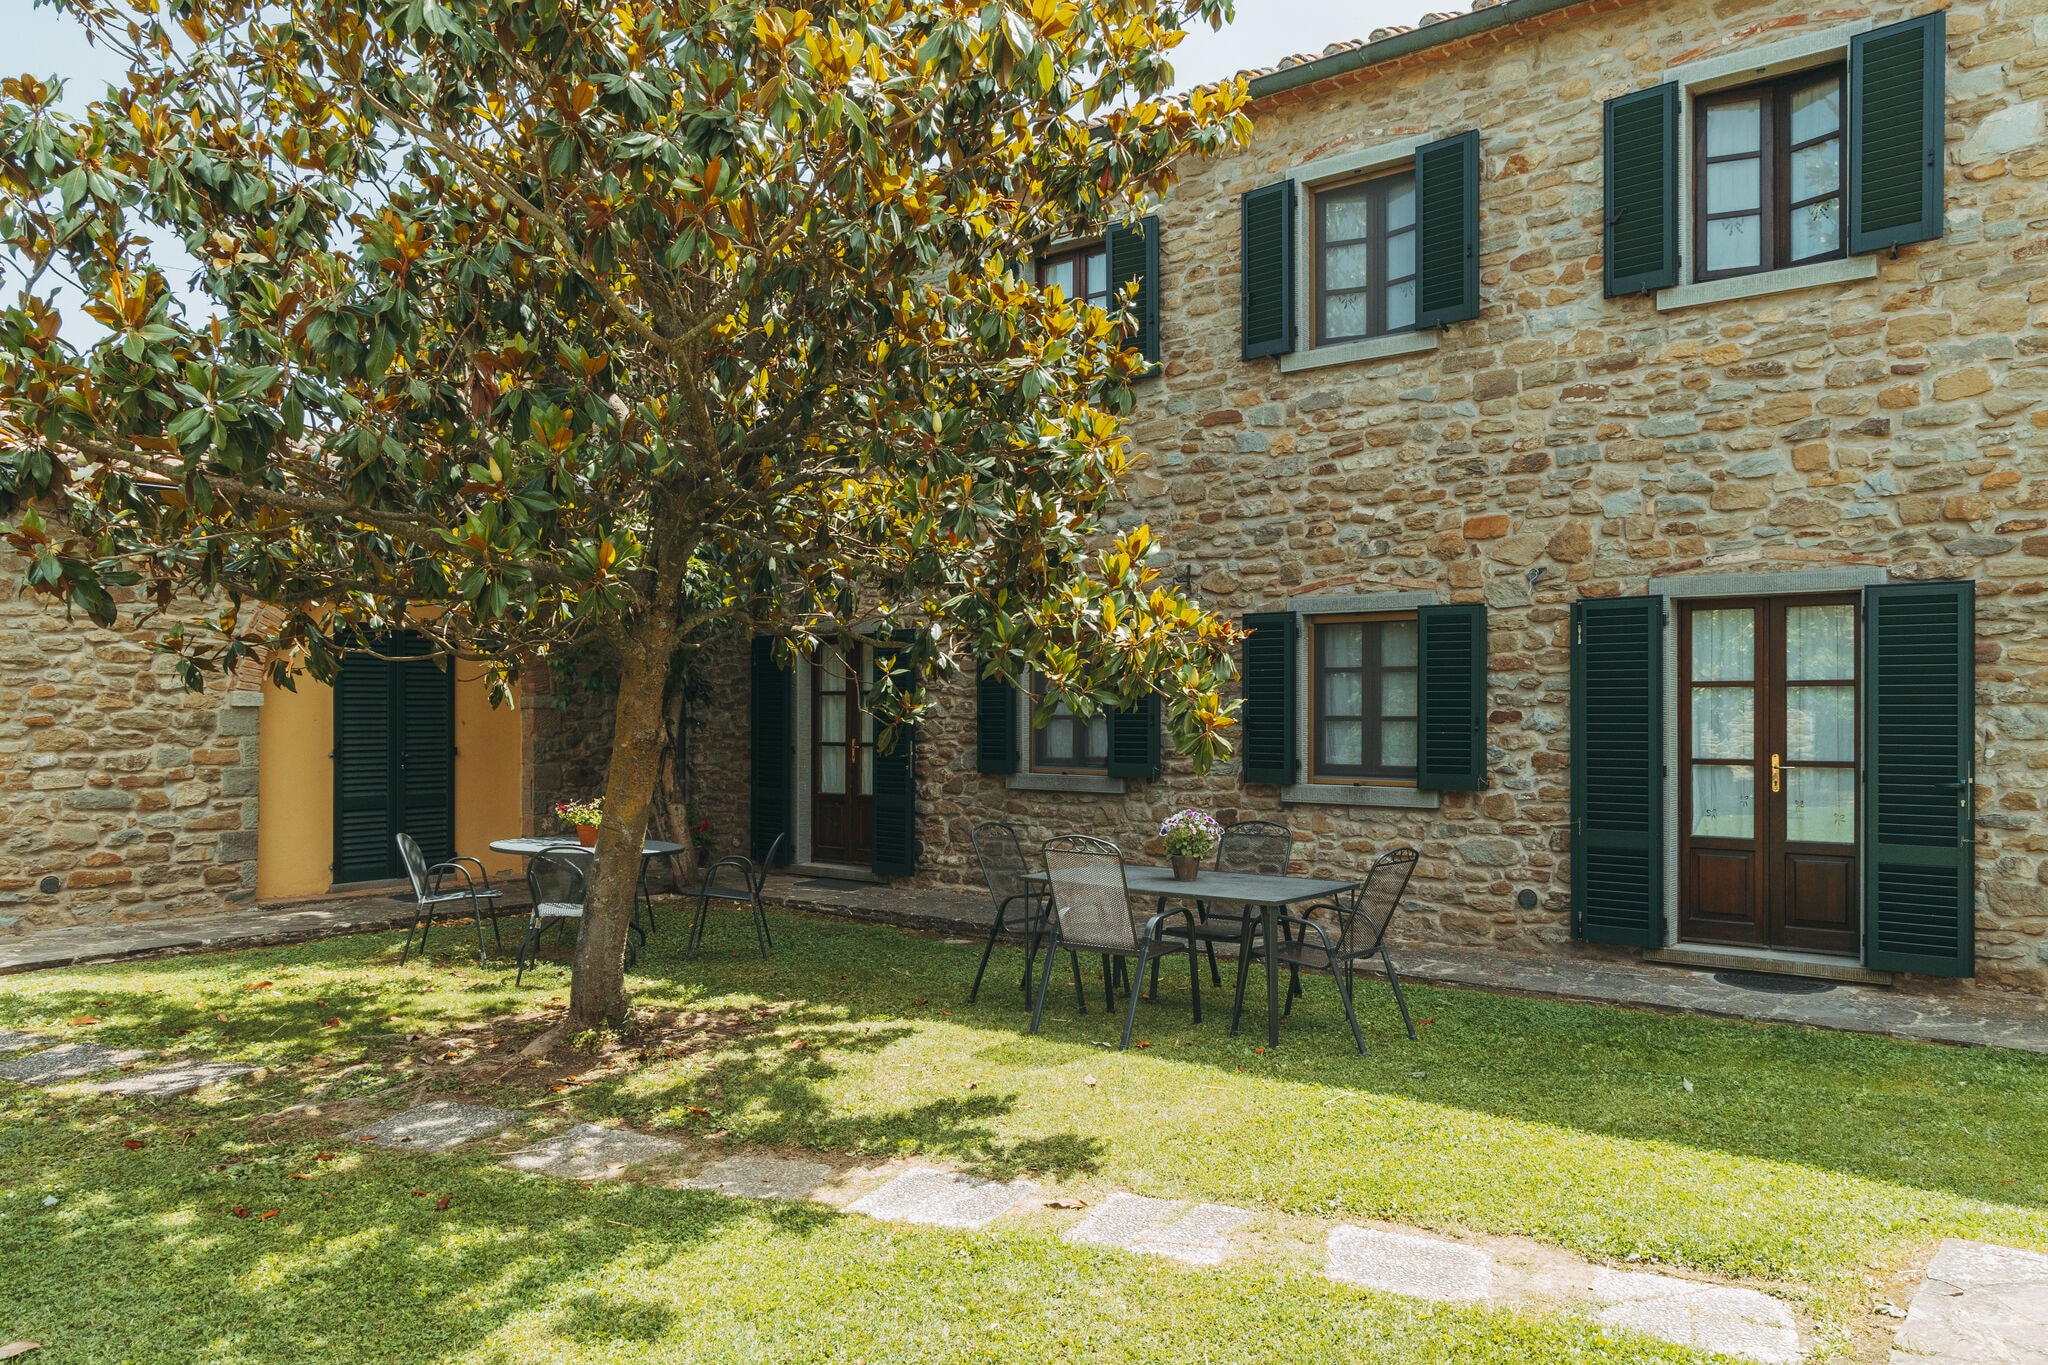 Vintage-Ferienhaus in Cortona mit Swimmingpool